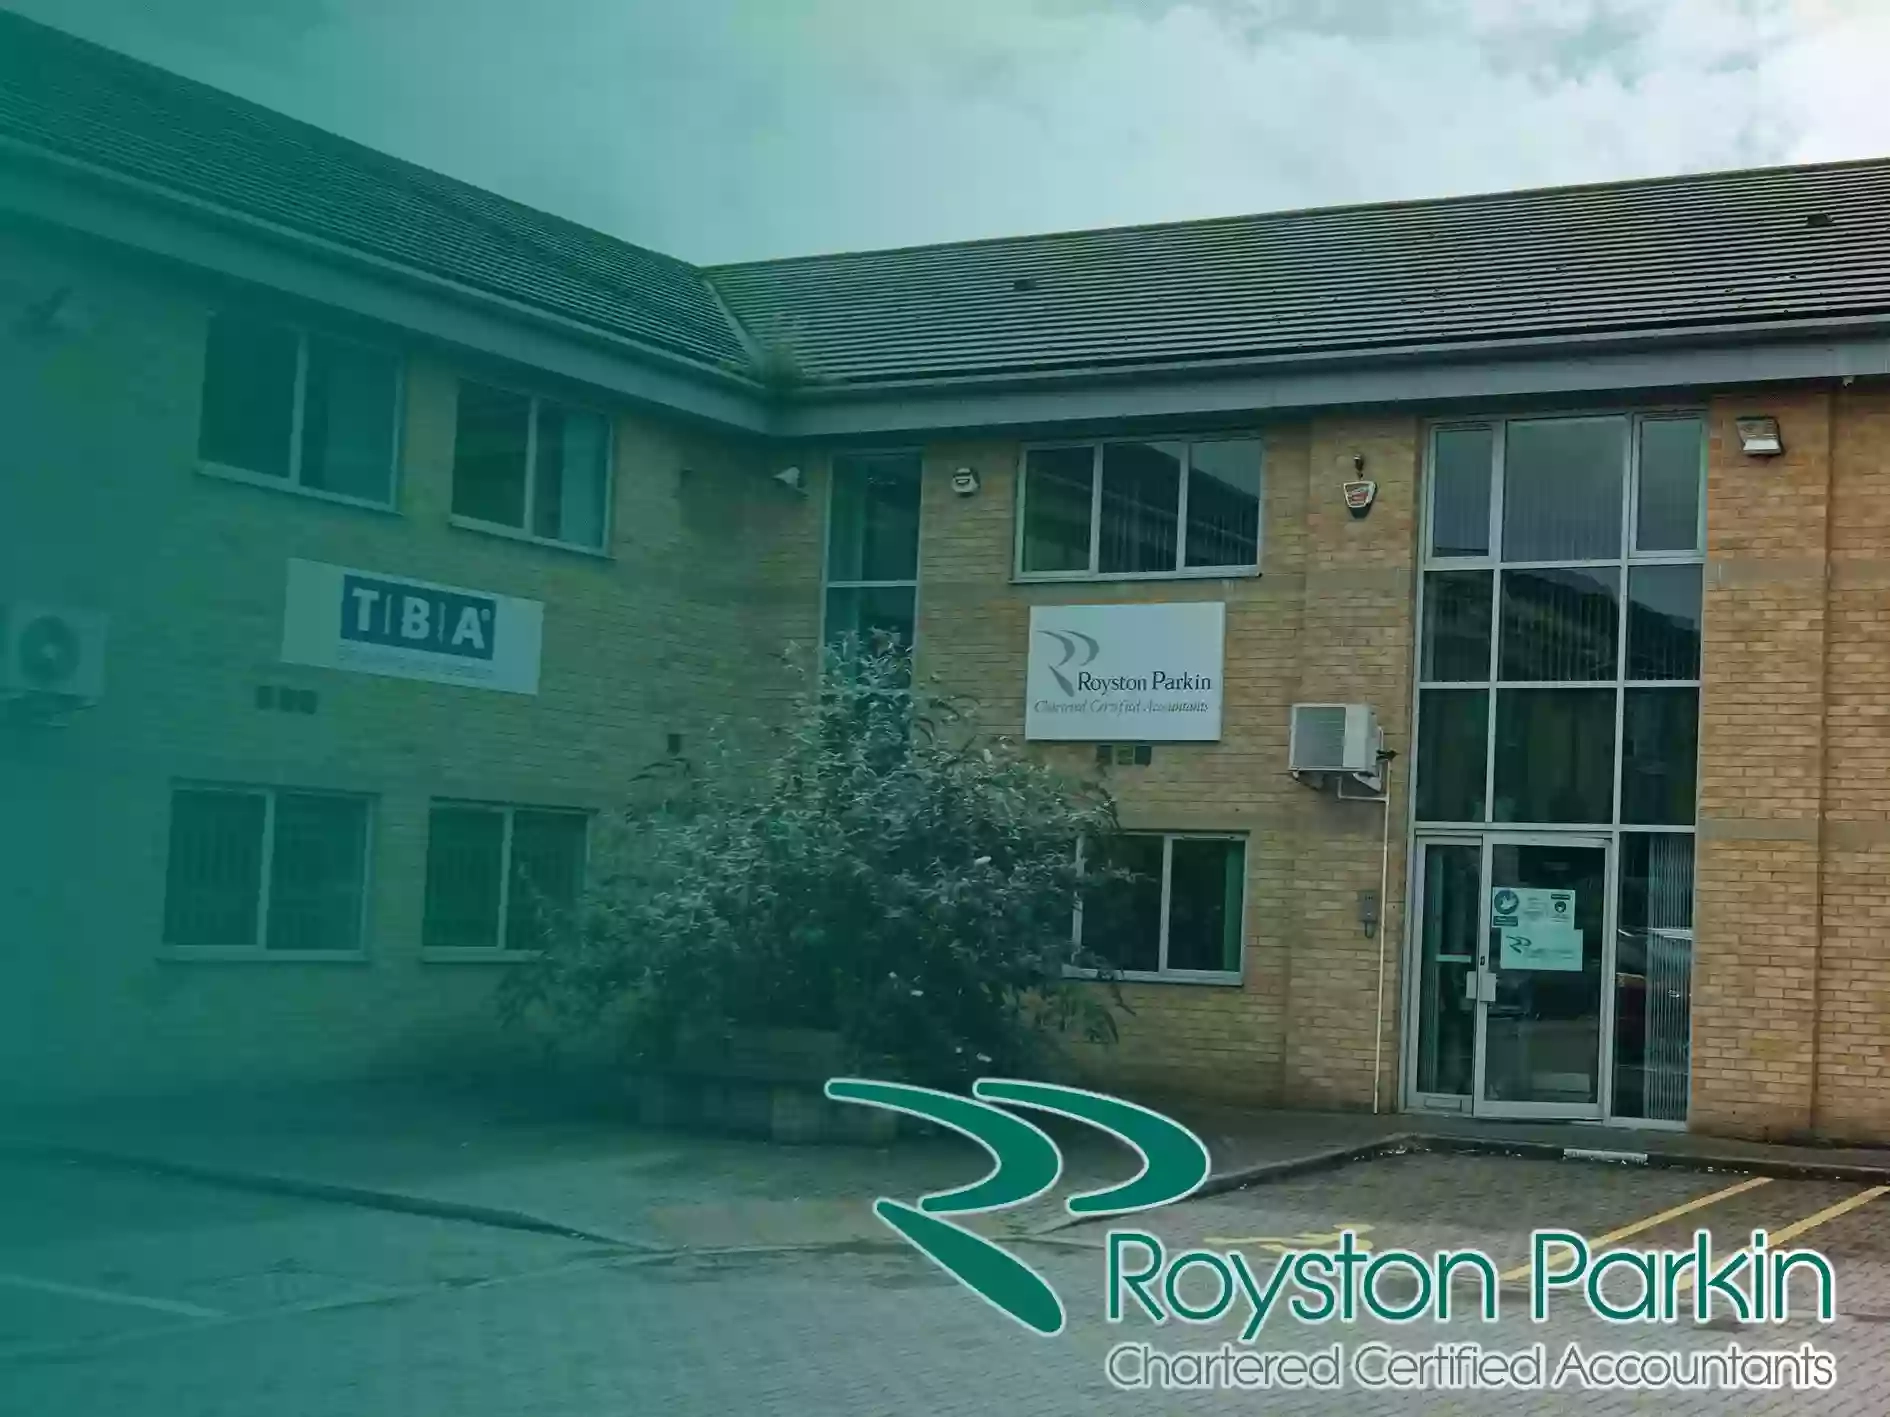 Accountants Doncaster | Royston Parkin